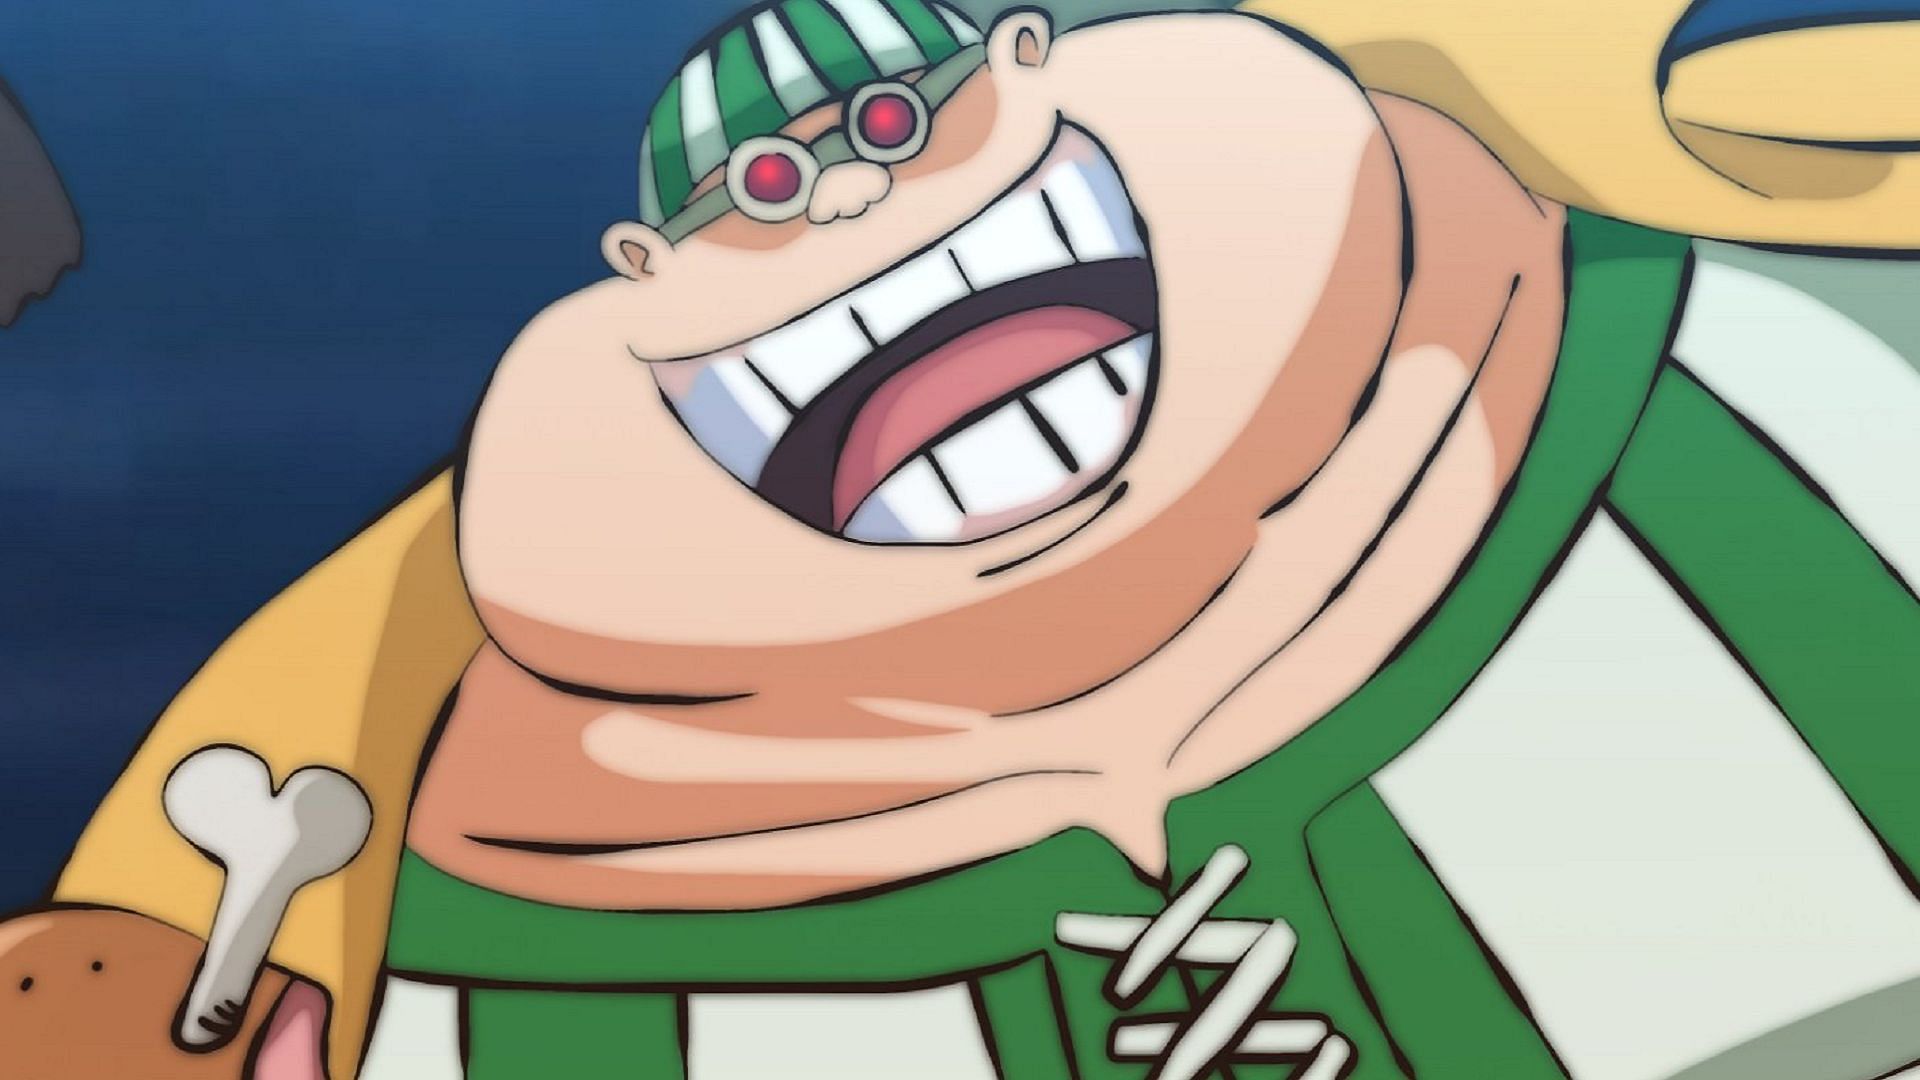 Lucky Roux (Image via Toei Animation, One Piece)